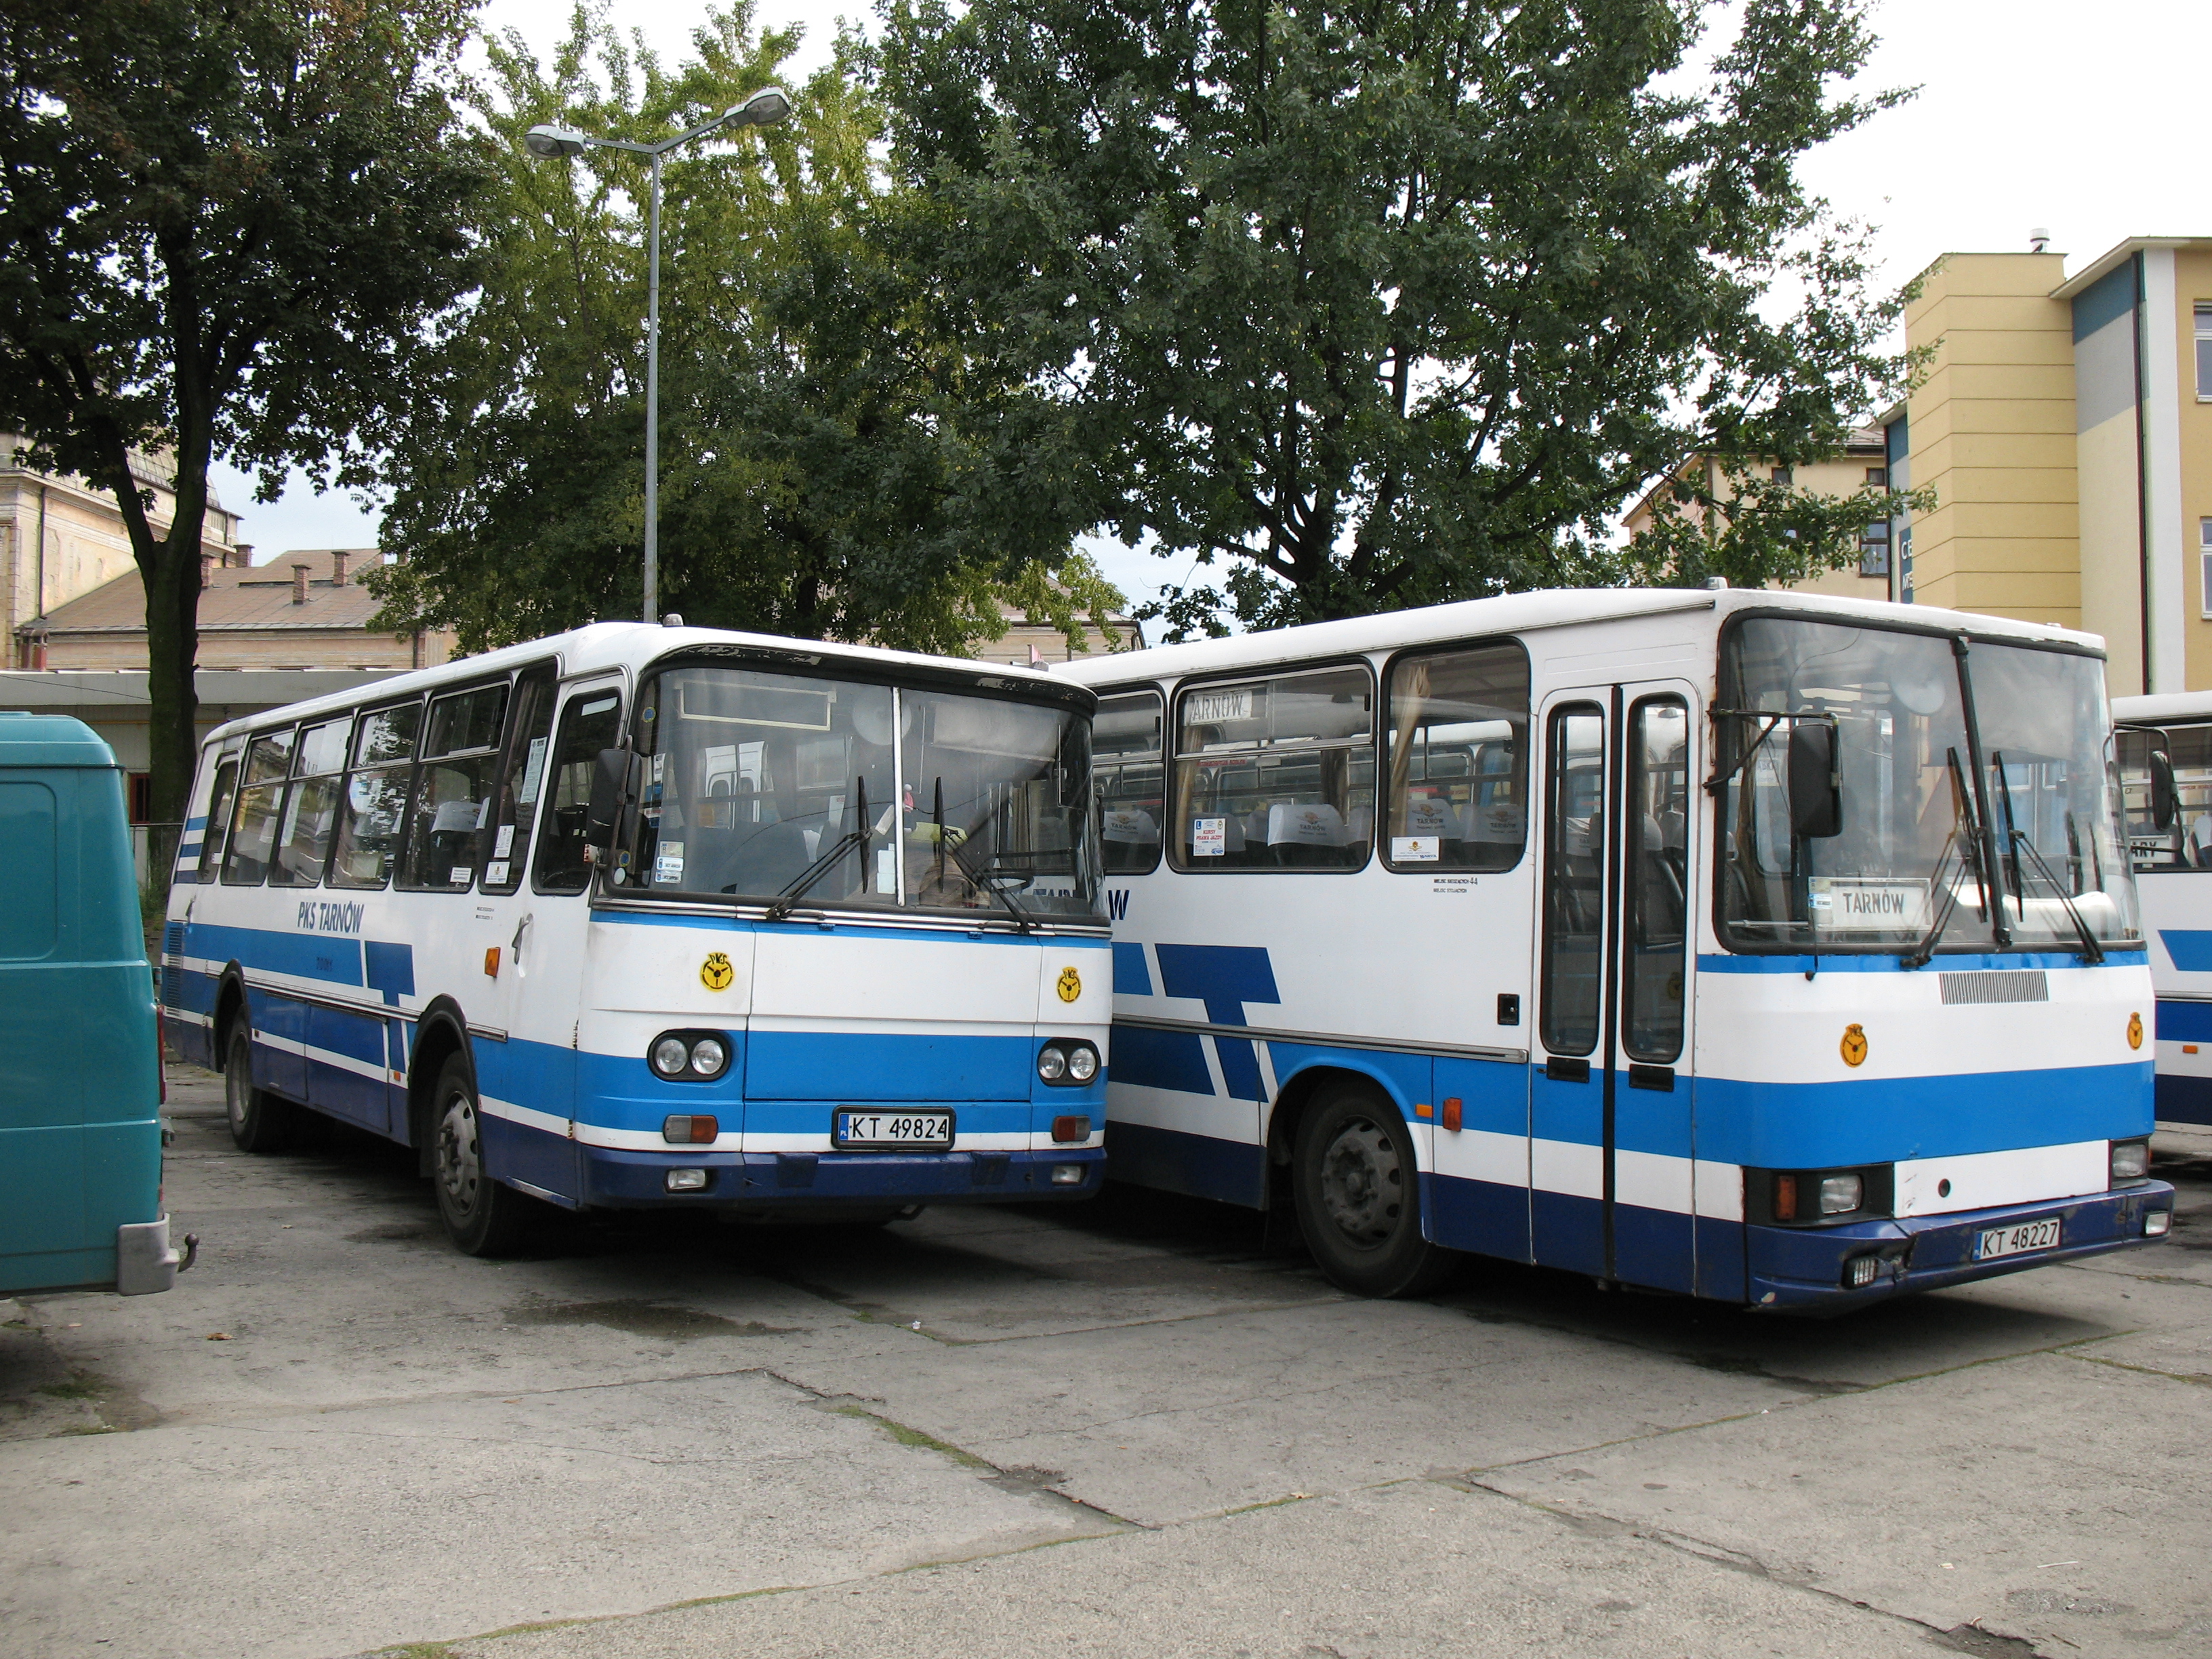 Autosan buses at the Tarnow bus station (Poland) | Flickr - Photo ...